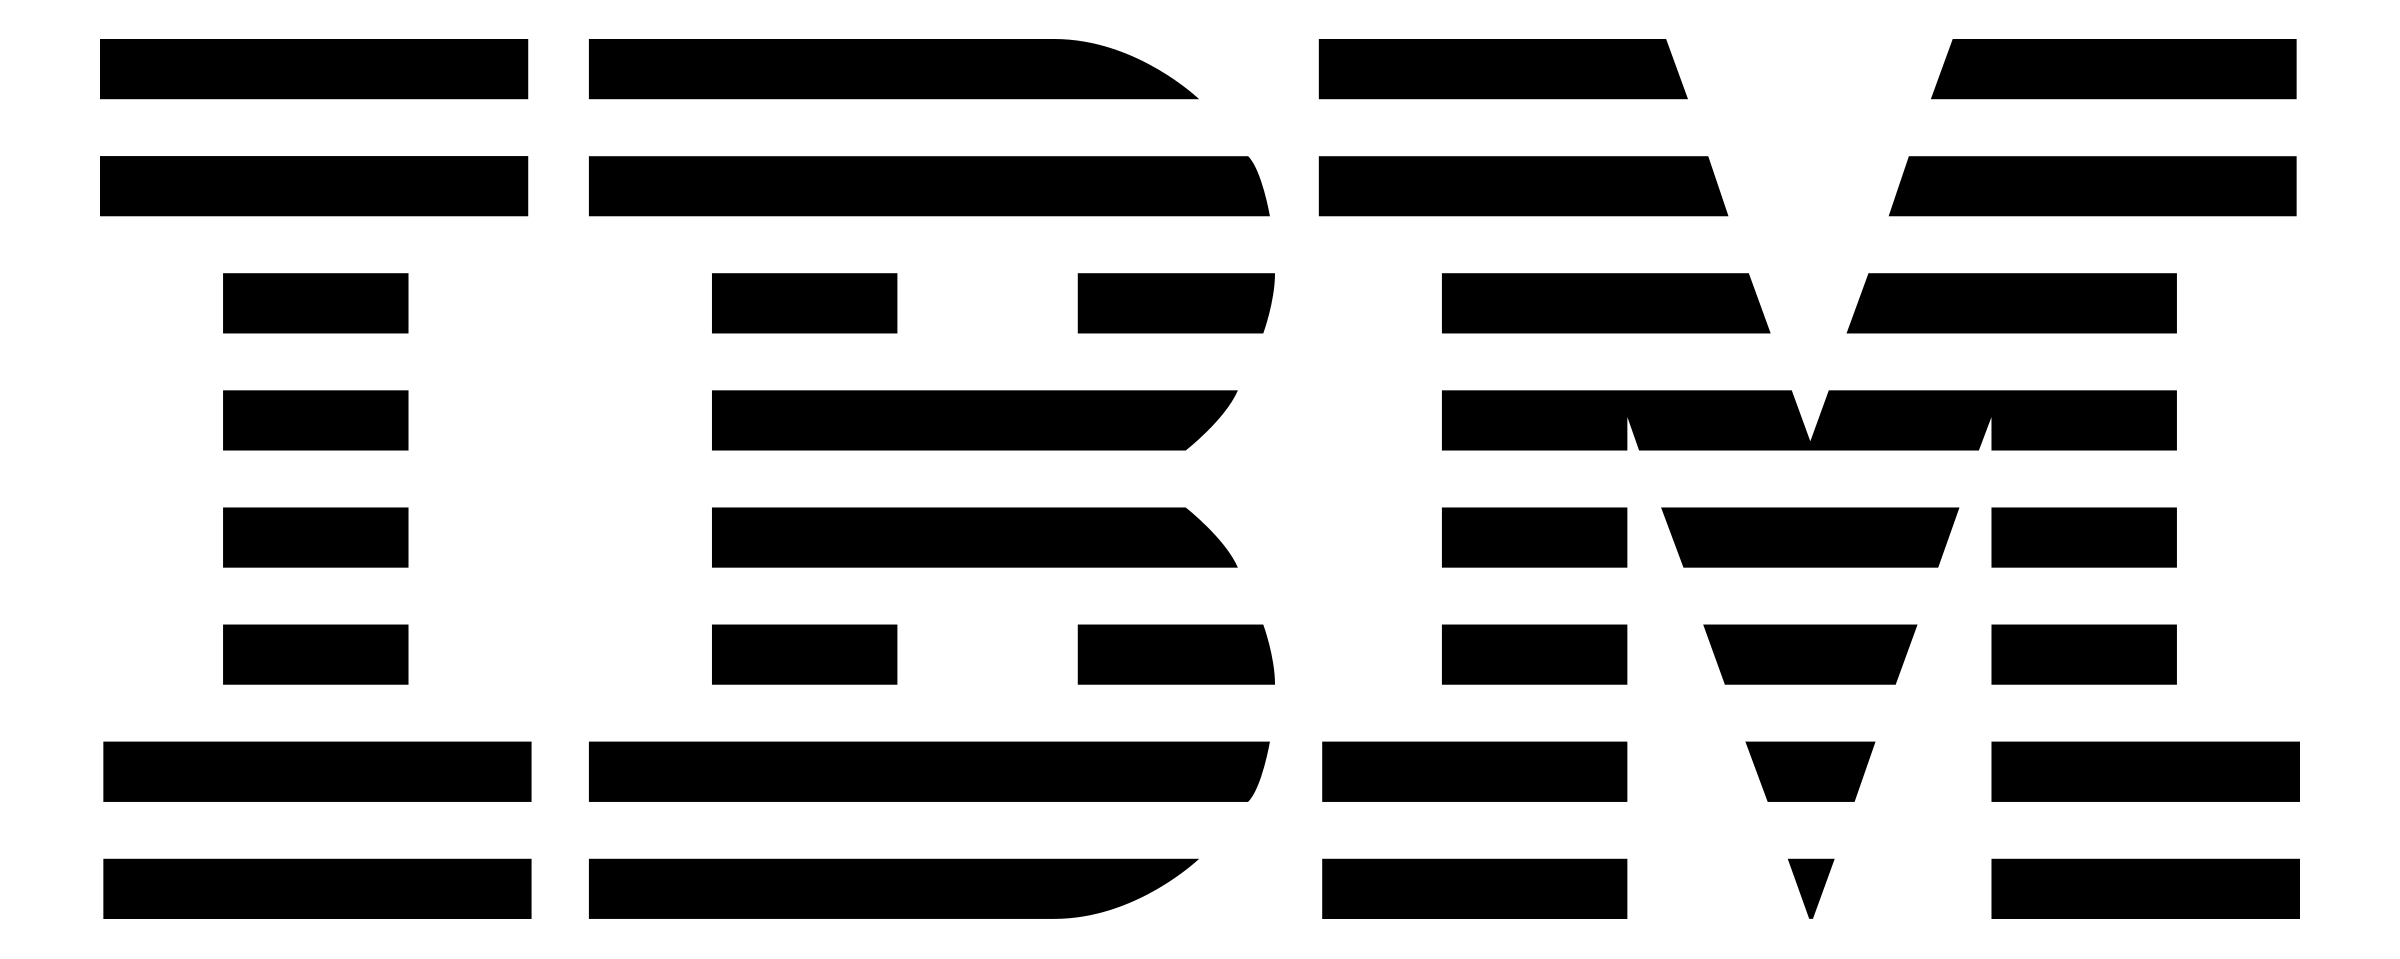 IBM Vector Logo - IBM Logo PNG Transparent & SVG Vector - Freebie Supply